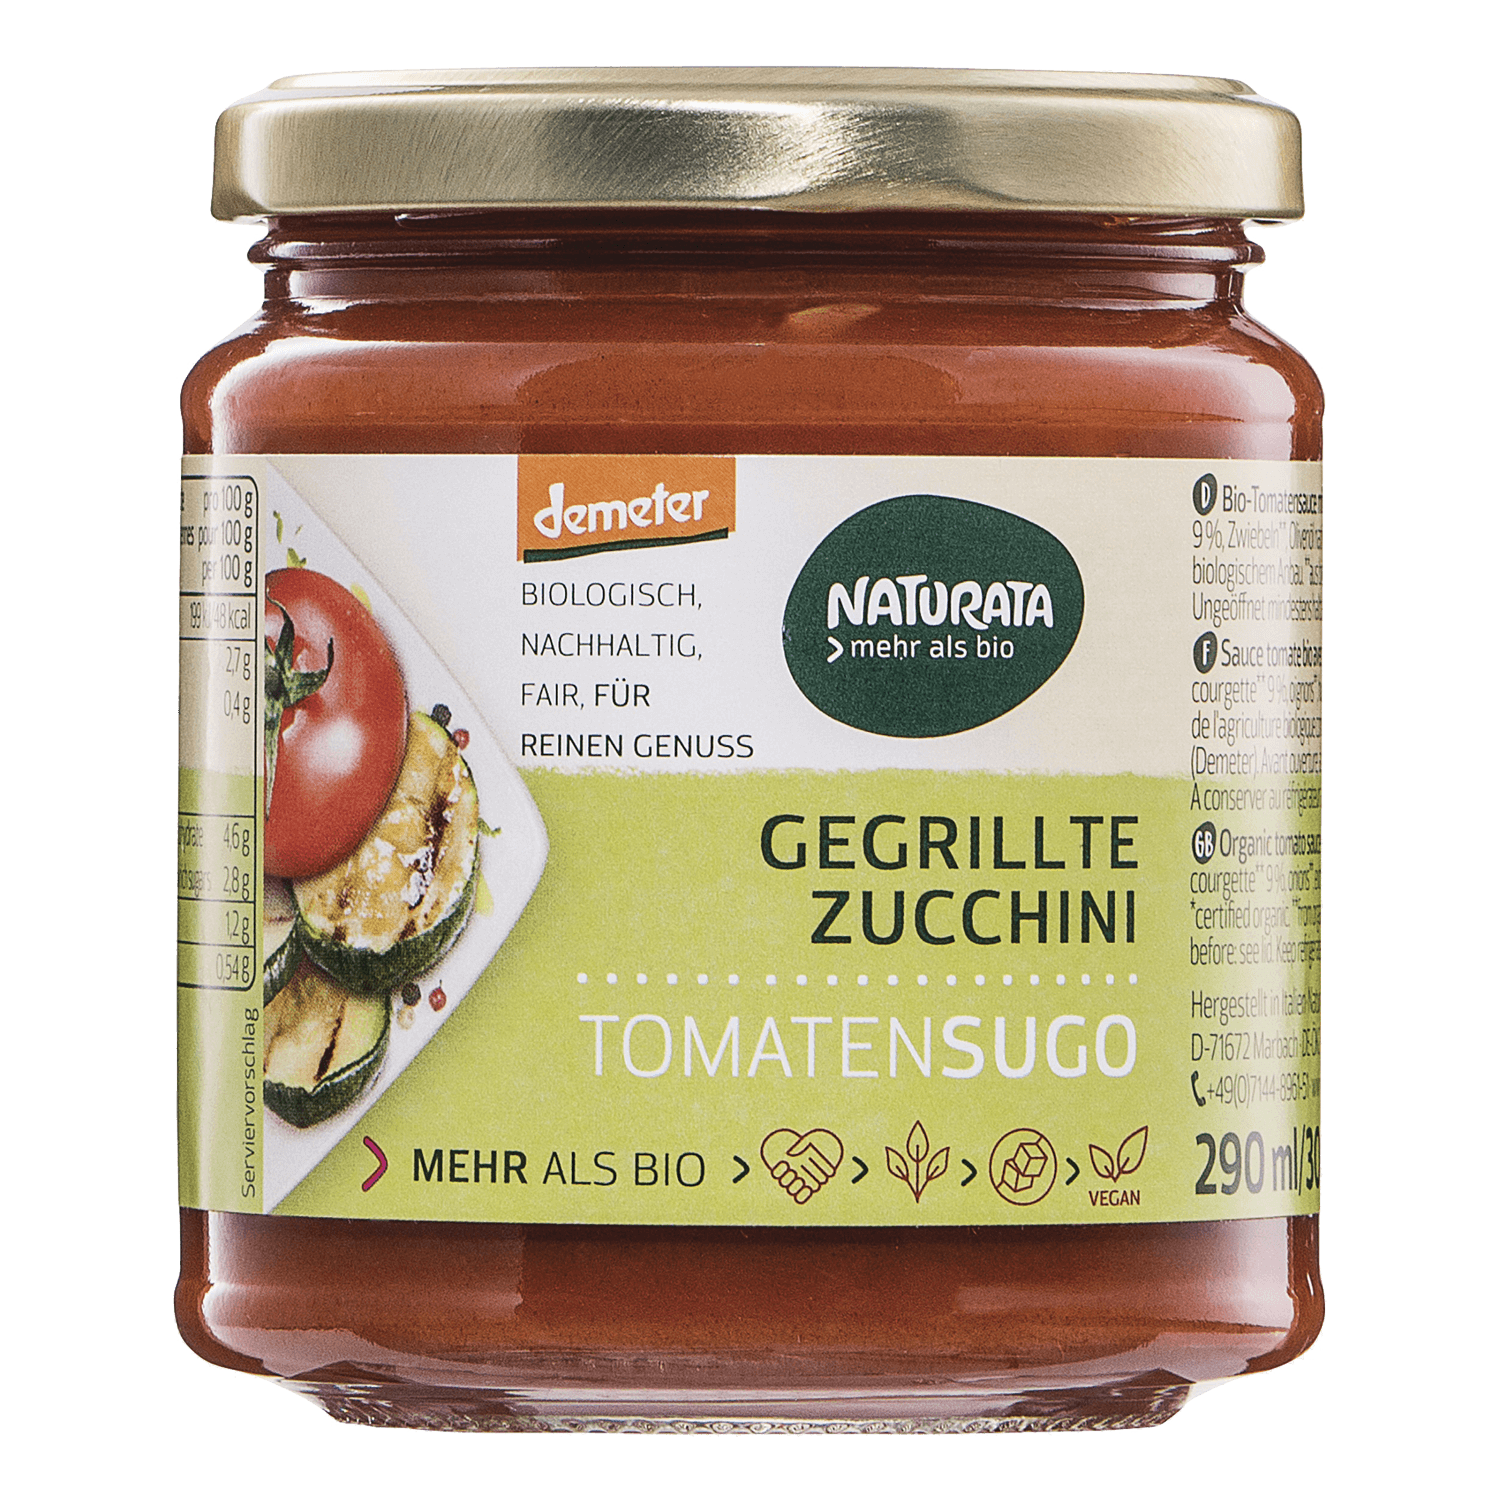 Tomatensugo mit gegrillter Zucchini, 290 ml